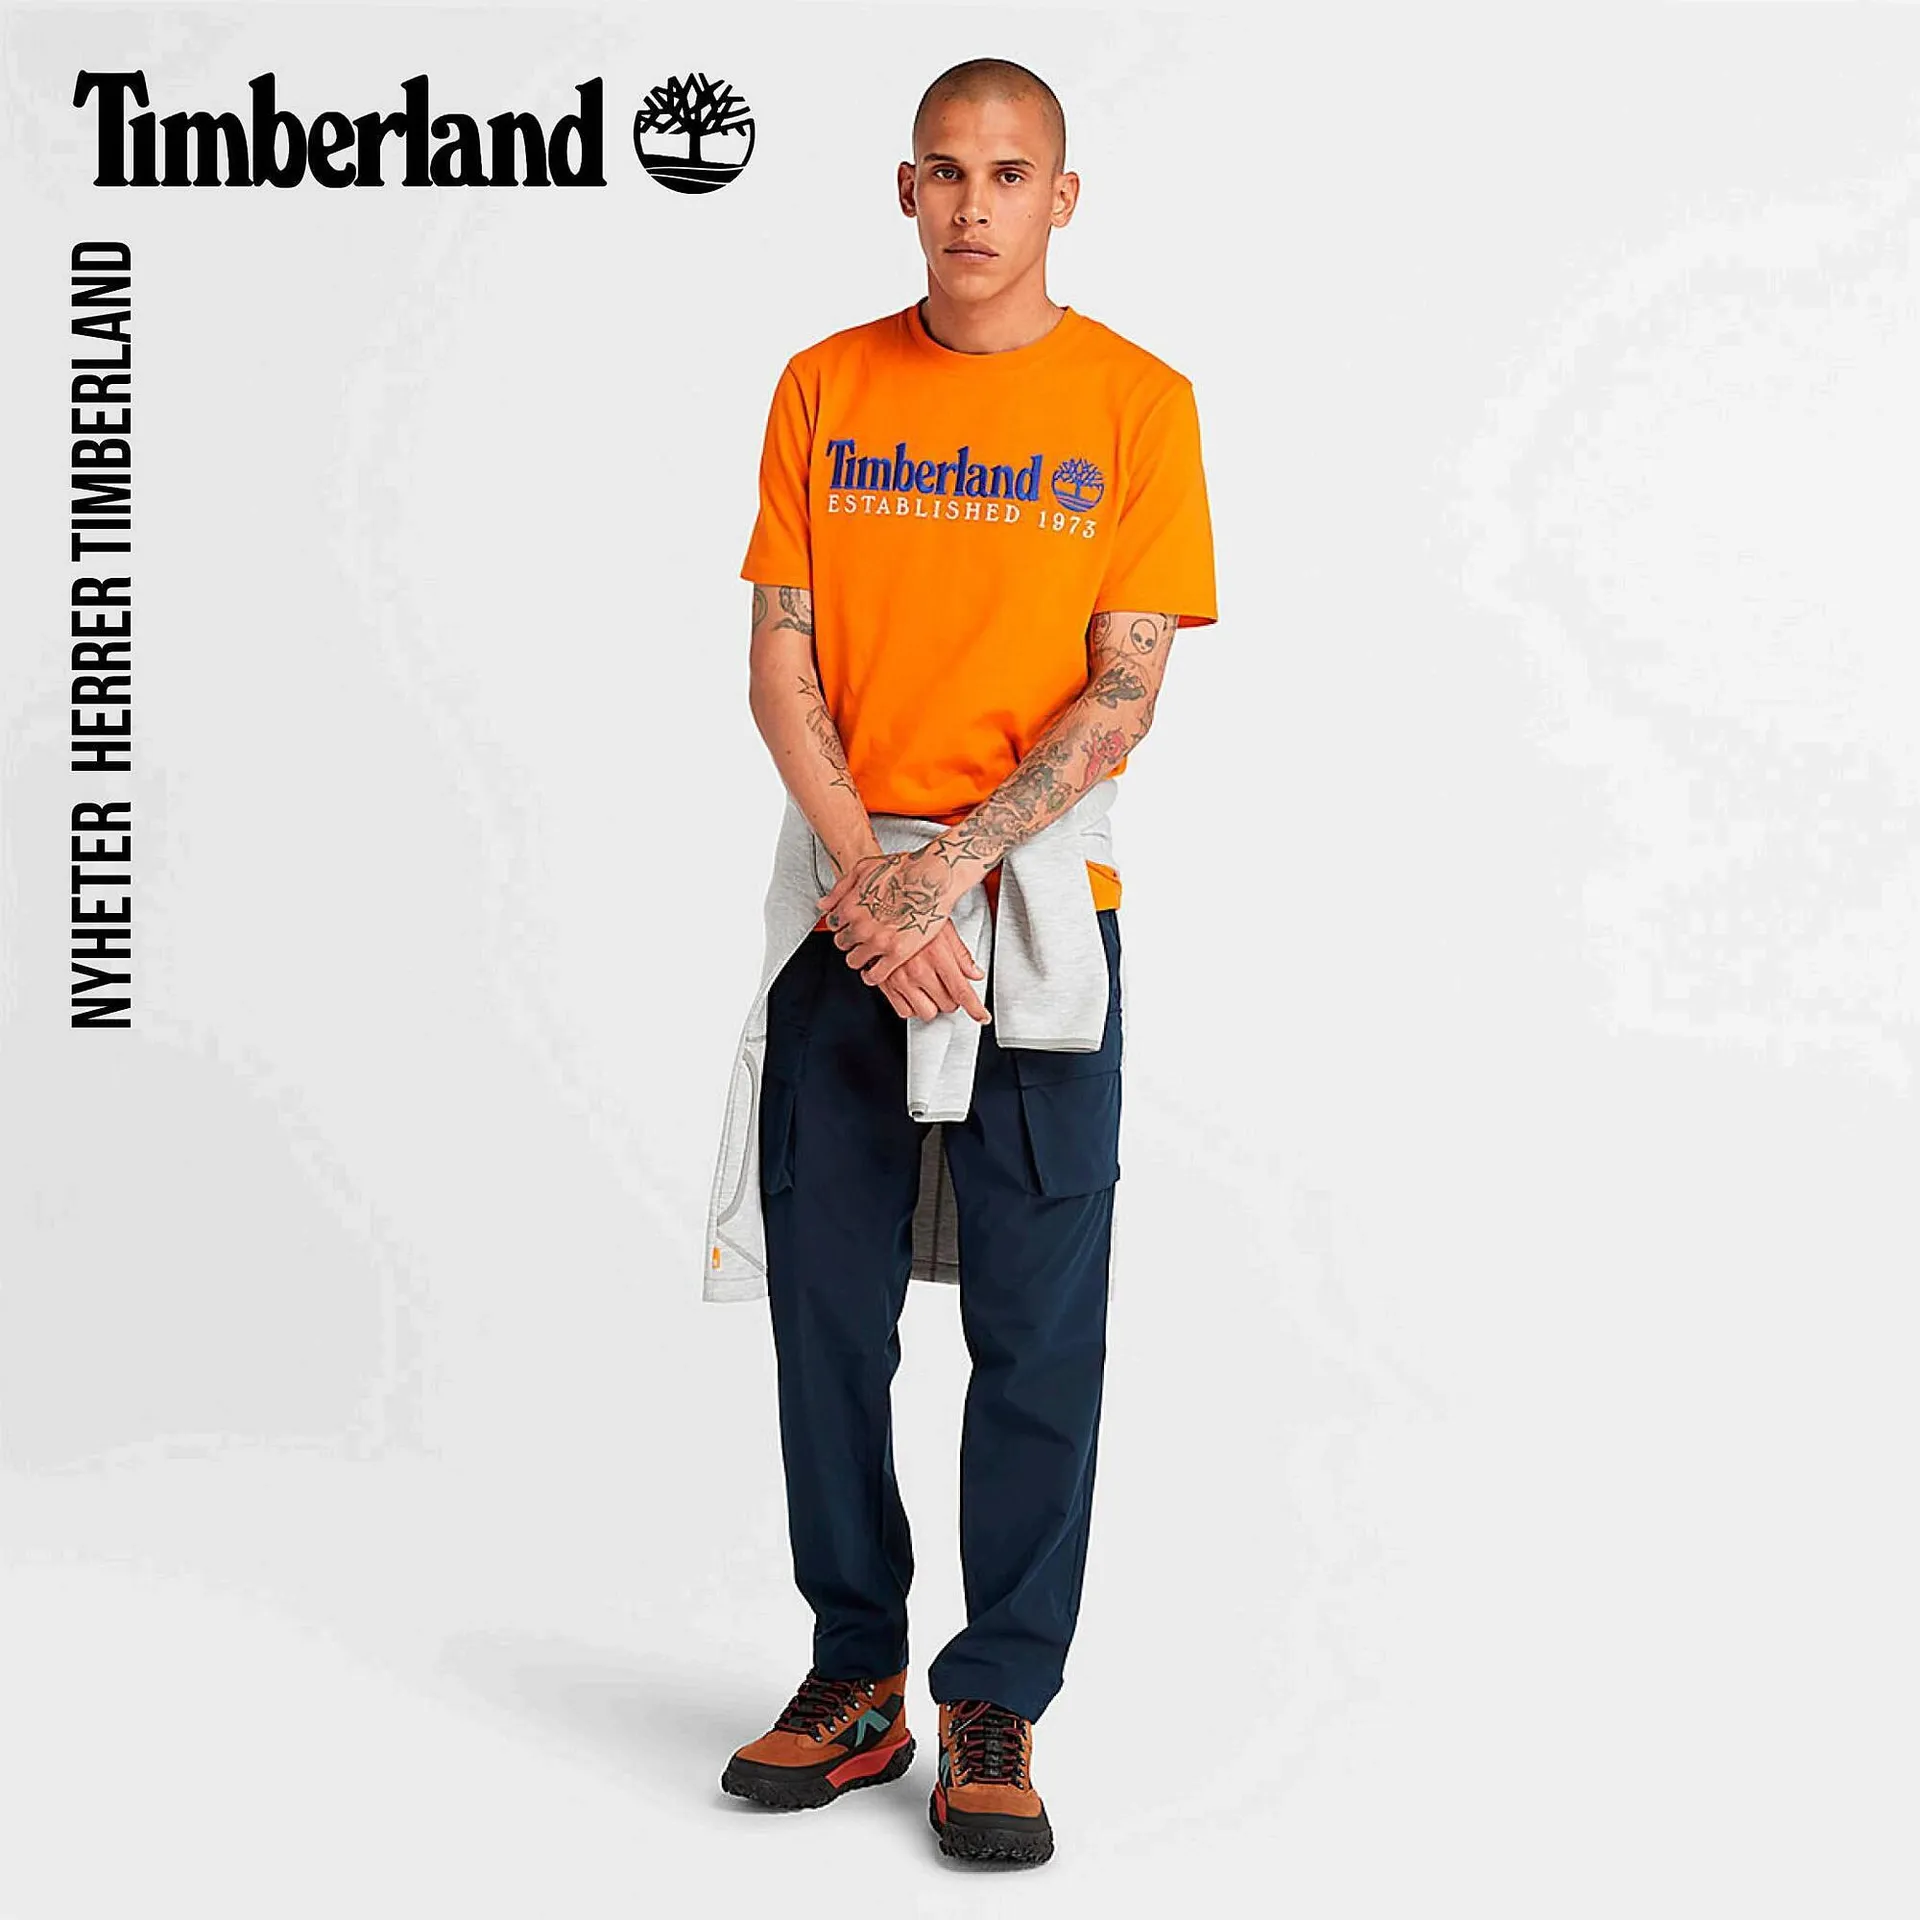 Timberland Kundeavis - 1